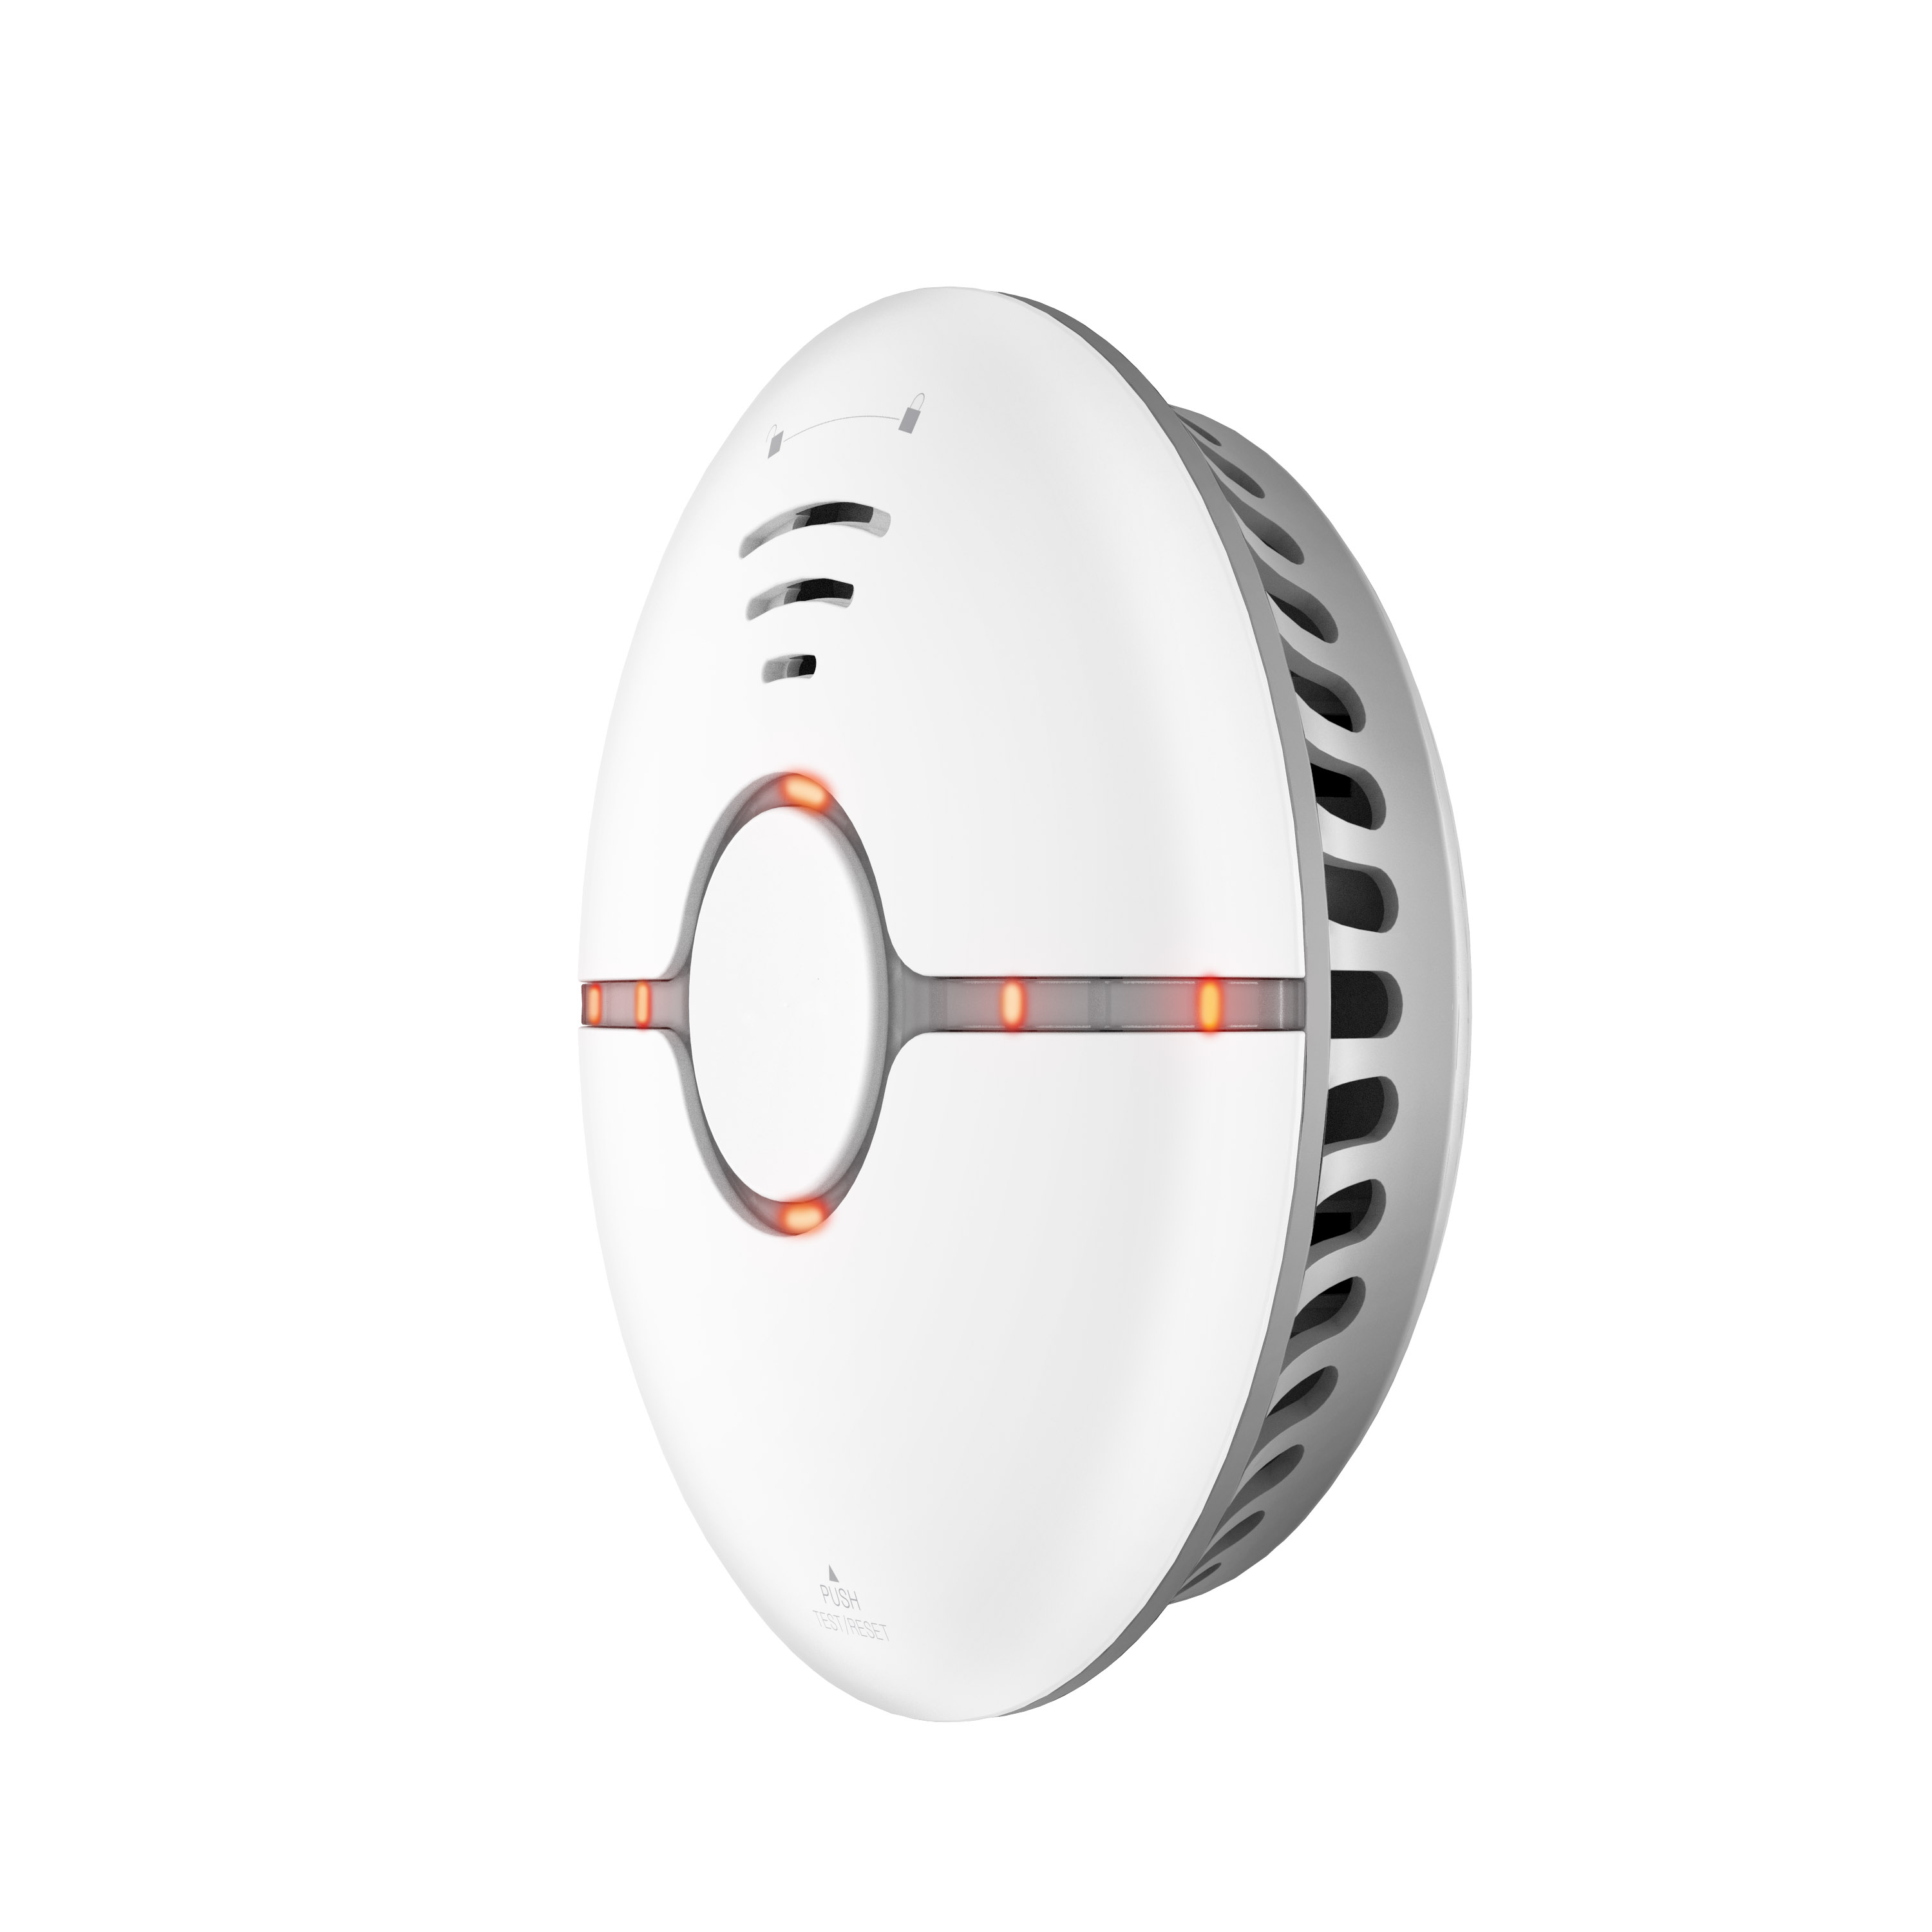 Tuya WiFi Smoke Wireless Smart Fire Smoke Alarm With Auto Self-Check Function App Remote Alarm 3